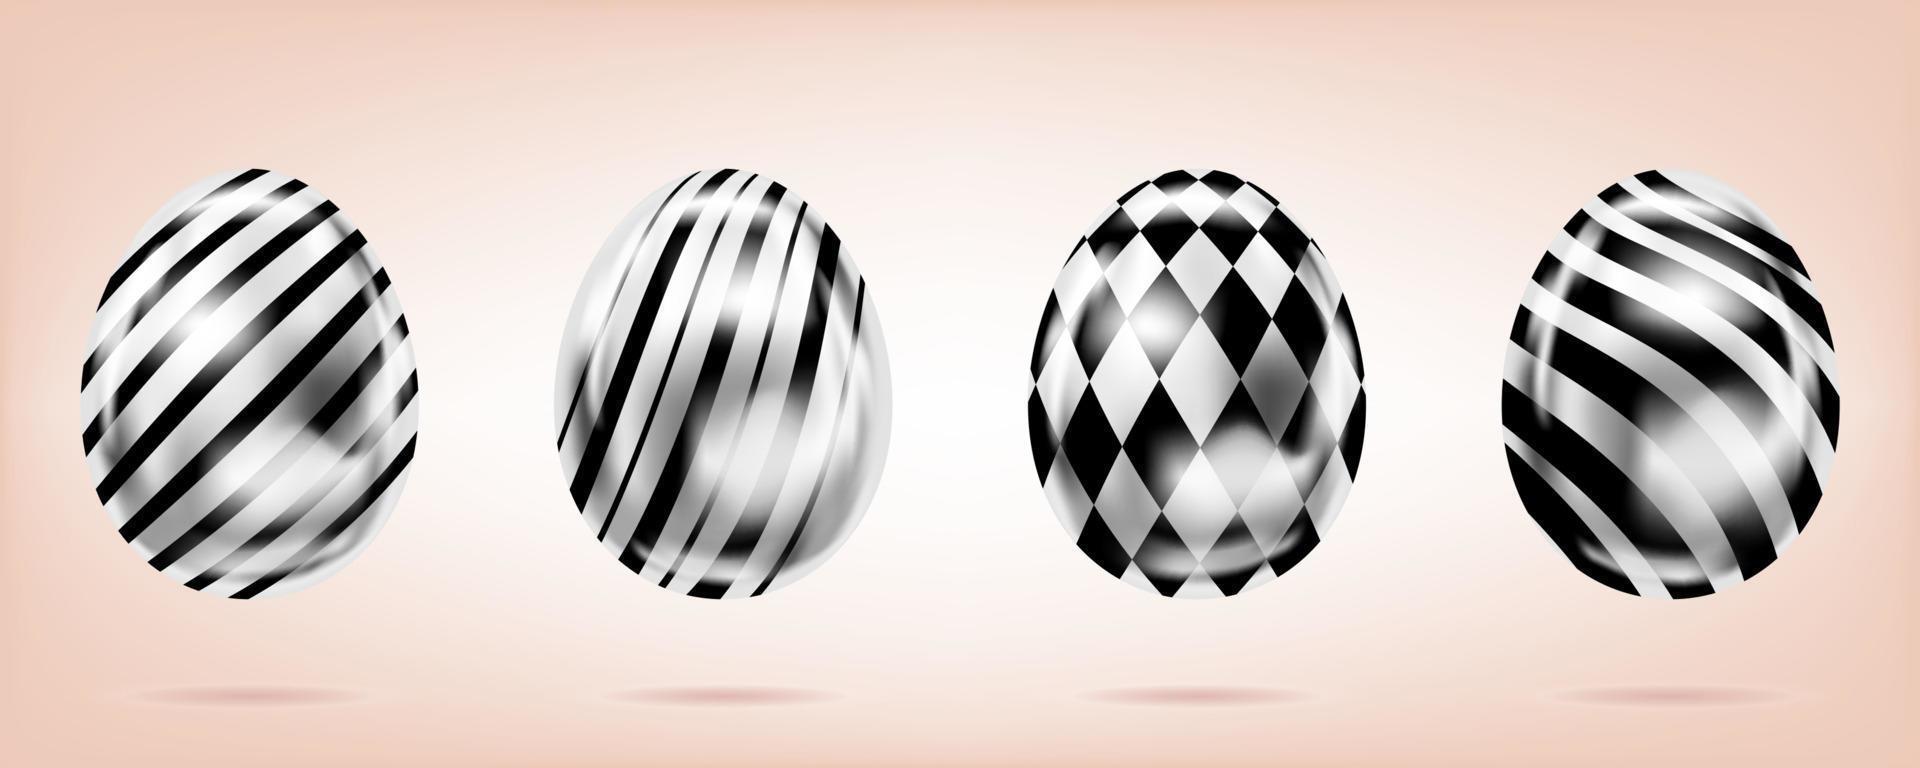 cuatro huevos de plata sobre fondo rosa. objetos aislados para pascua. rayas y diamantes adornados vector